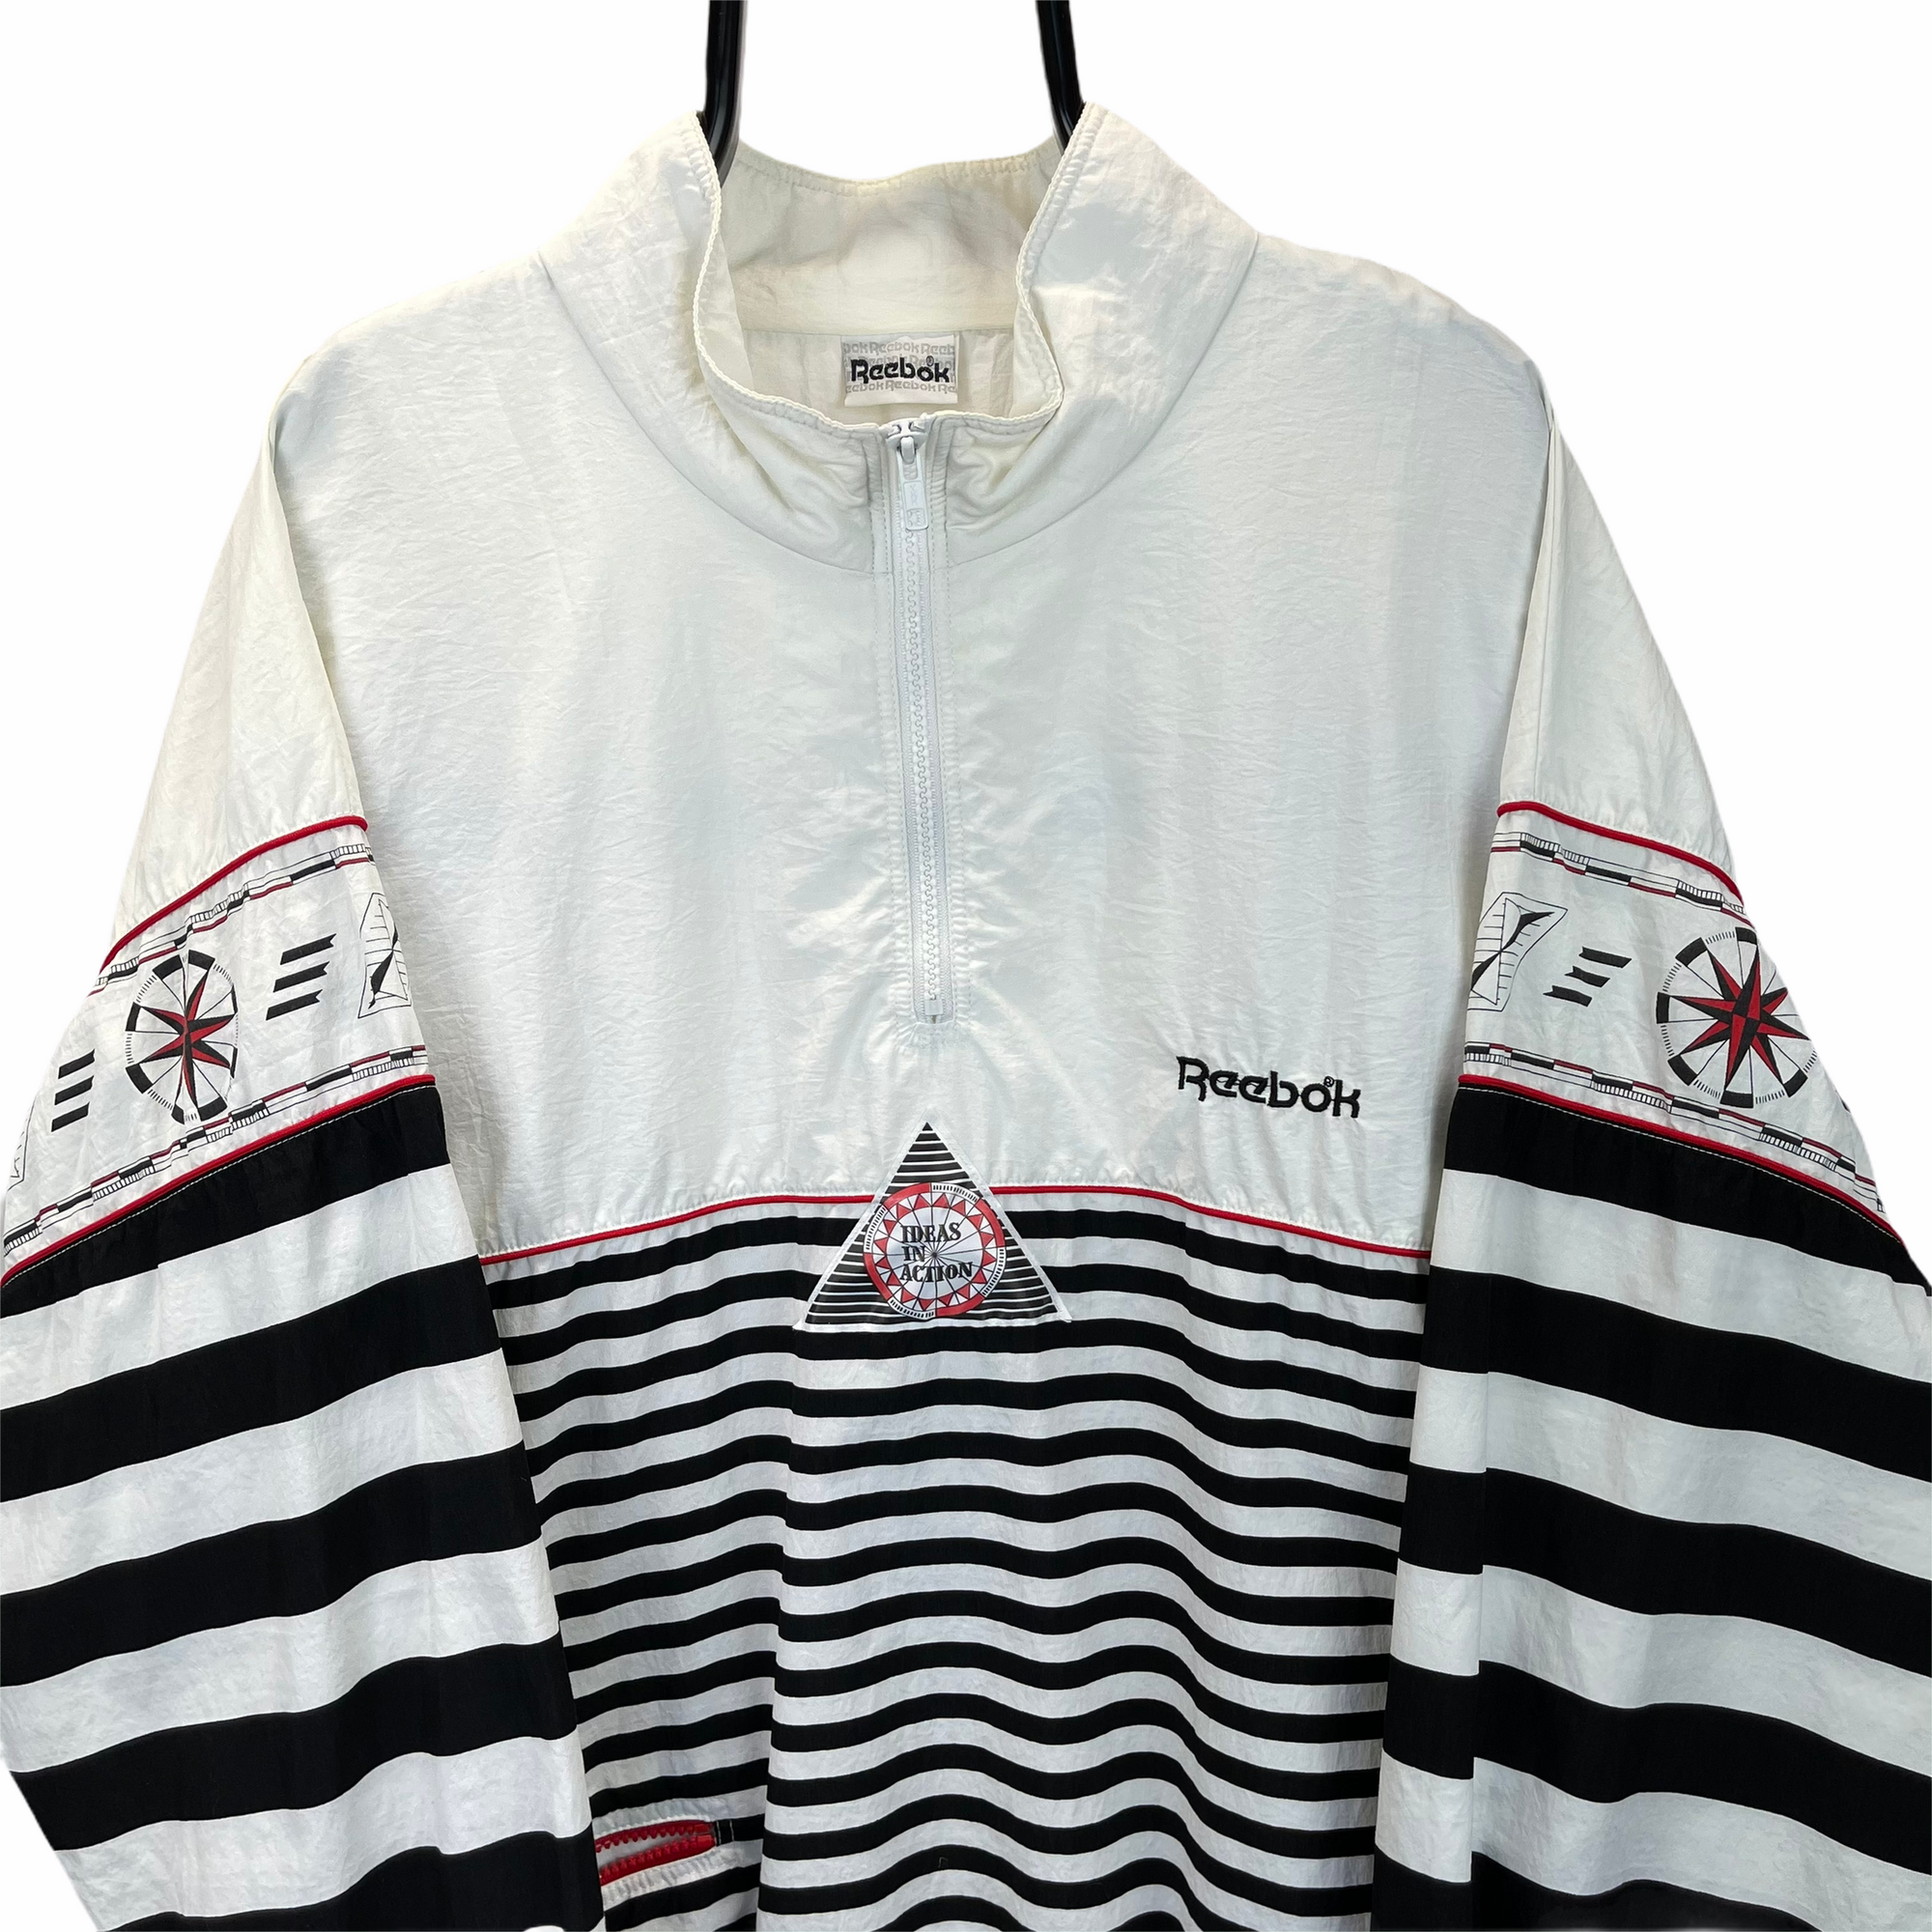 Vintage 80s Reebok 1/4 Zip Track Jacket in White, Black & Red - Men's XL/Women's XXL